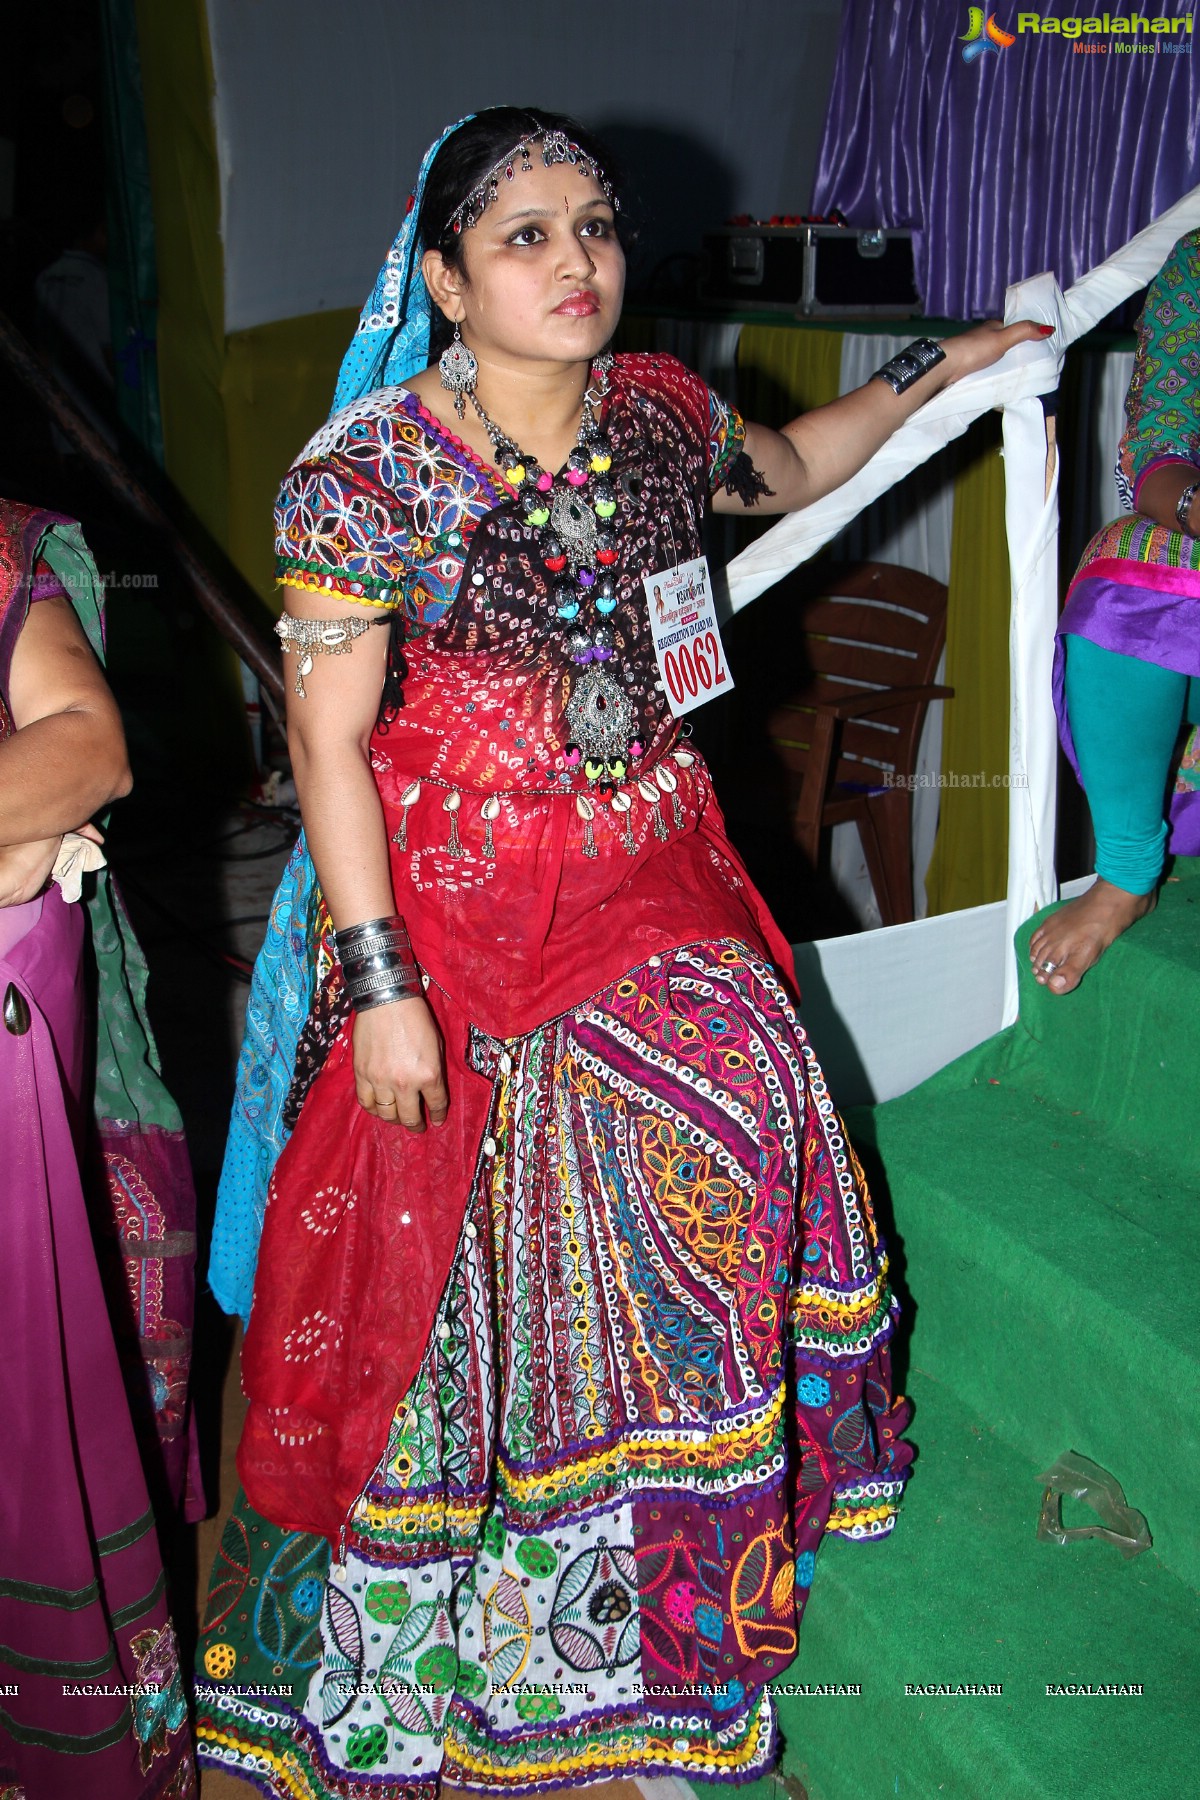 Navratri Dandiya Utsav 2013 Season 3 by Nandu Bilal at Mallareddy Gardens, Hyderabad